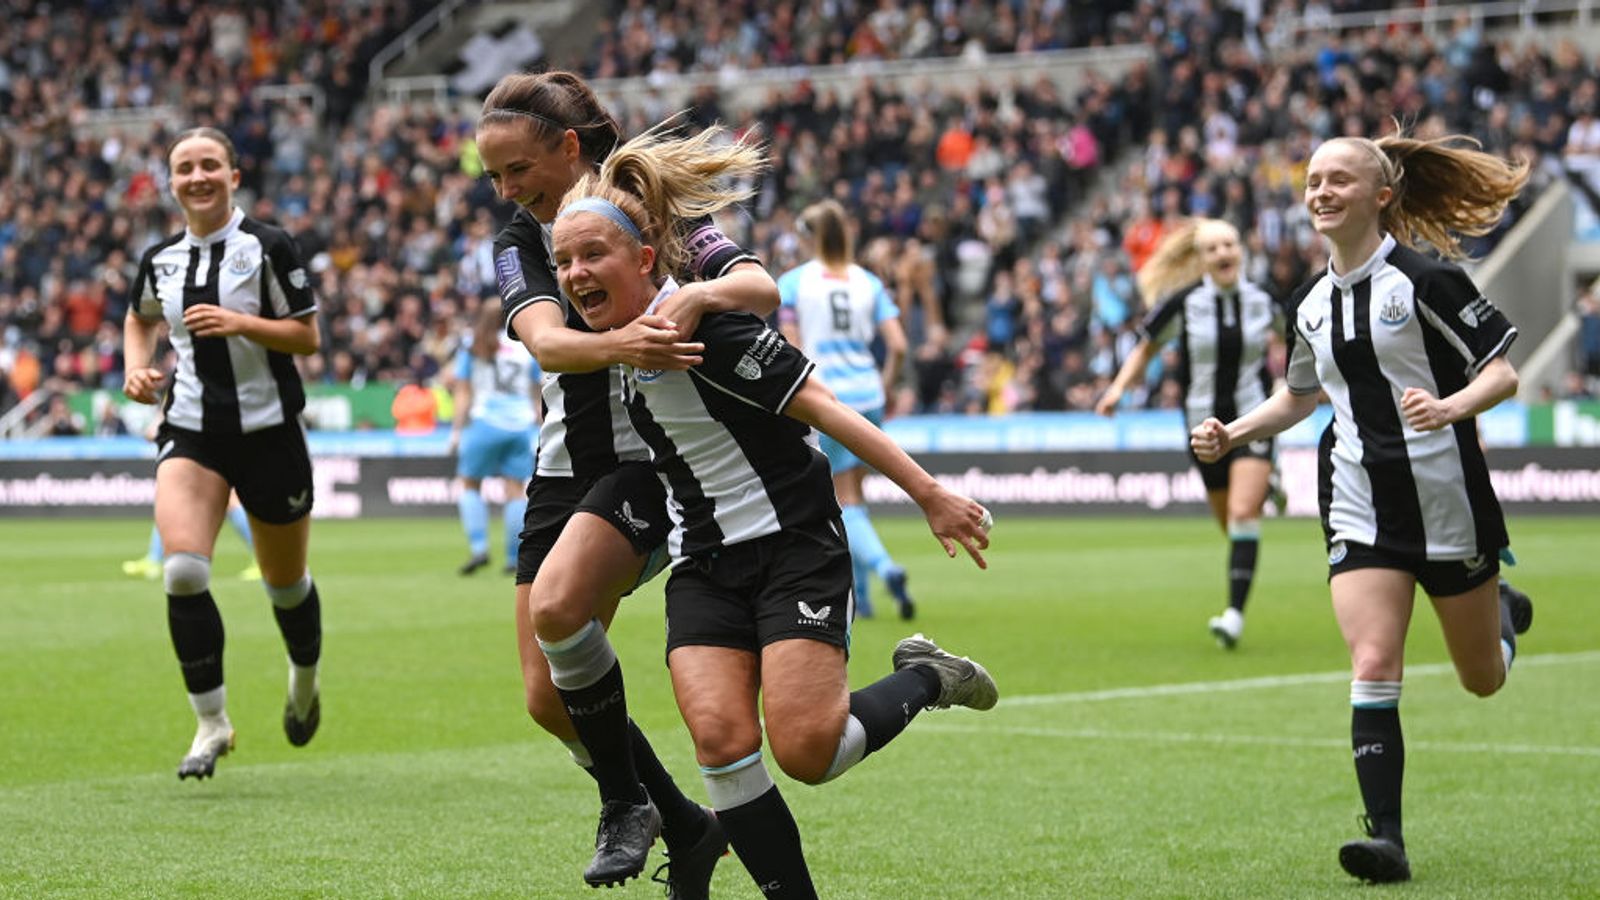 Newcastle United Women memecahkan rekor kehadiran dengan 22.134 penonton pada pertandingan pertama di St James’ Park |  berita sepak bola